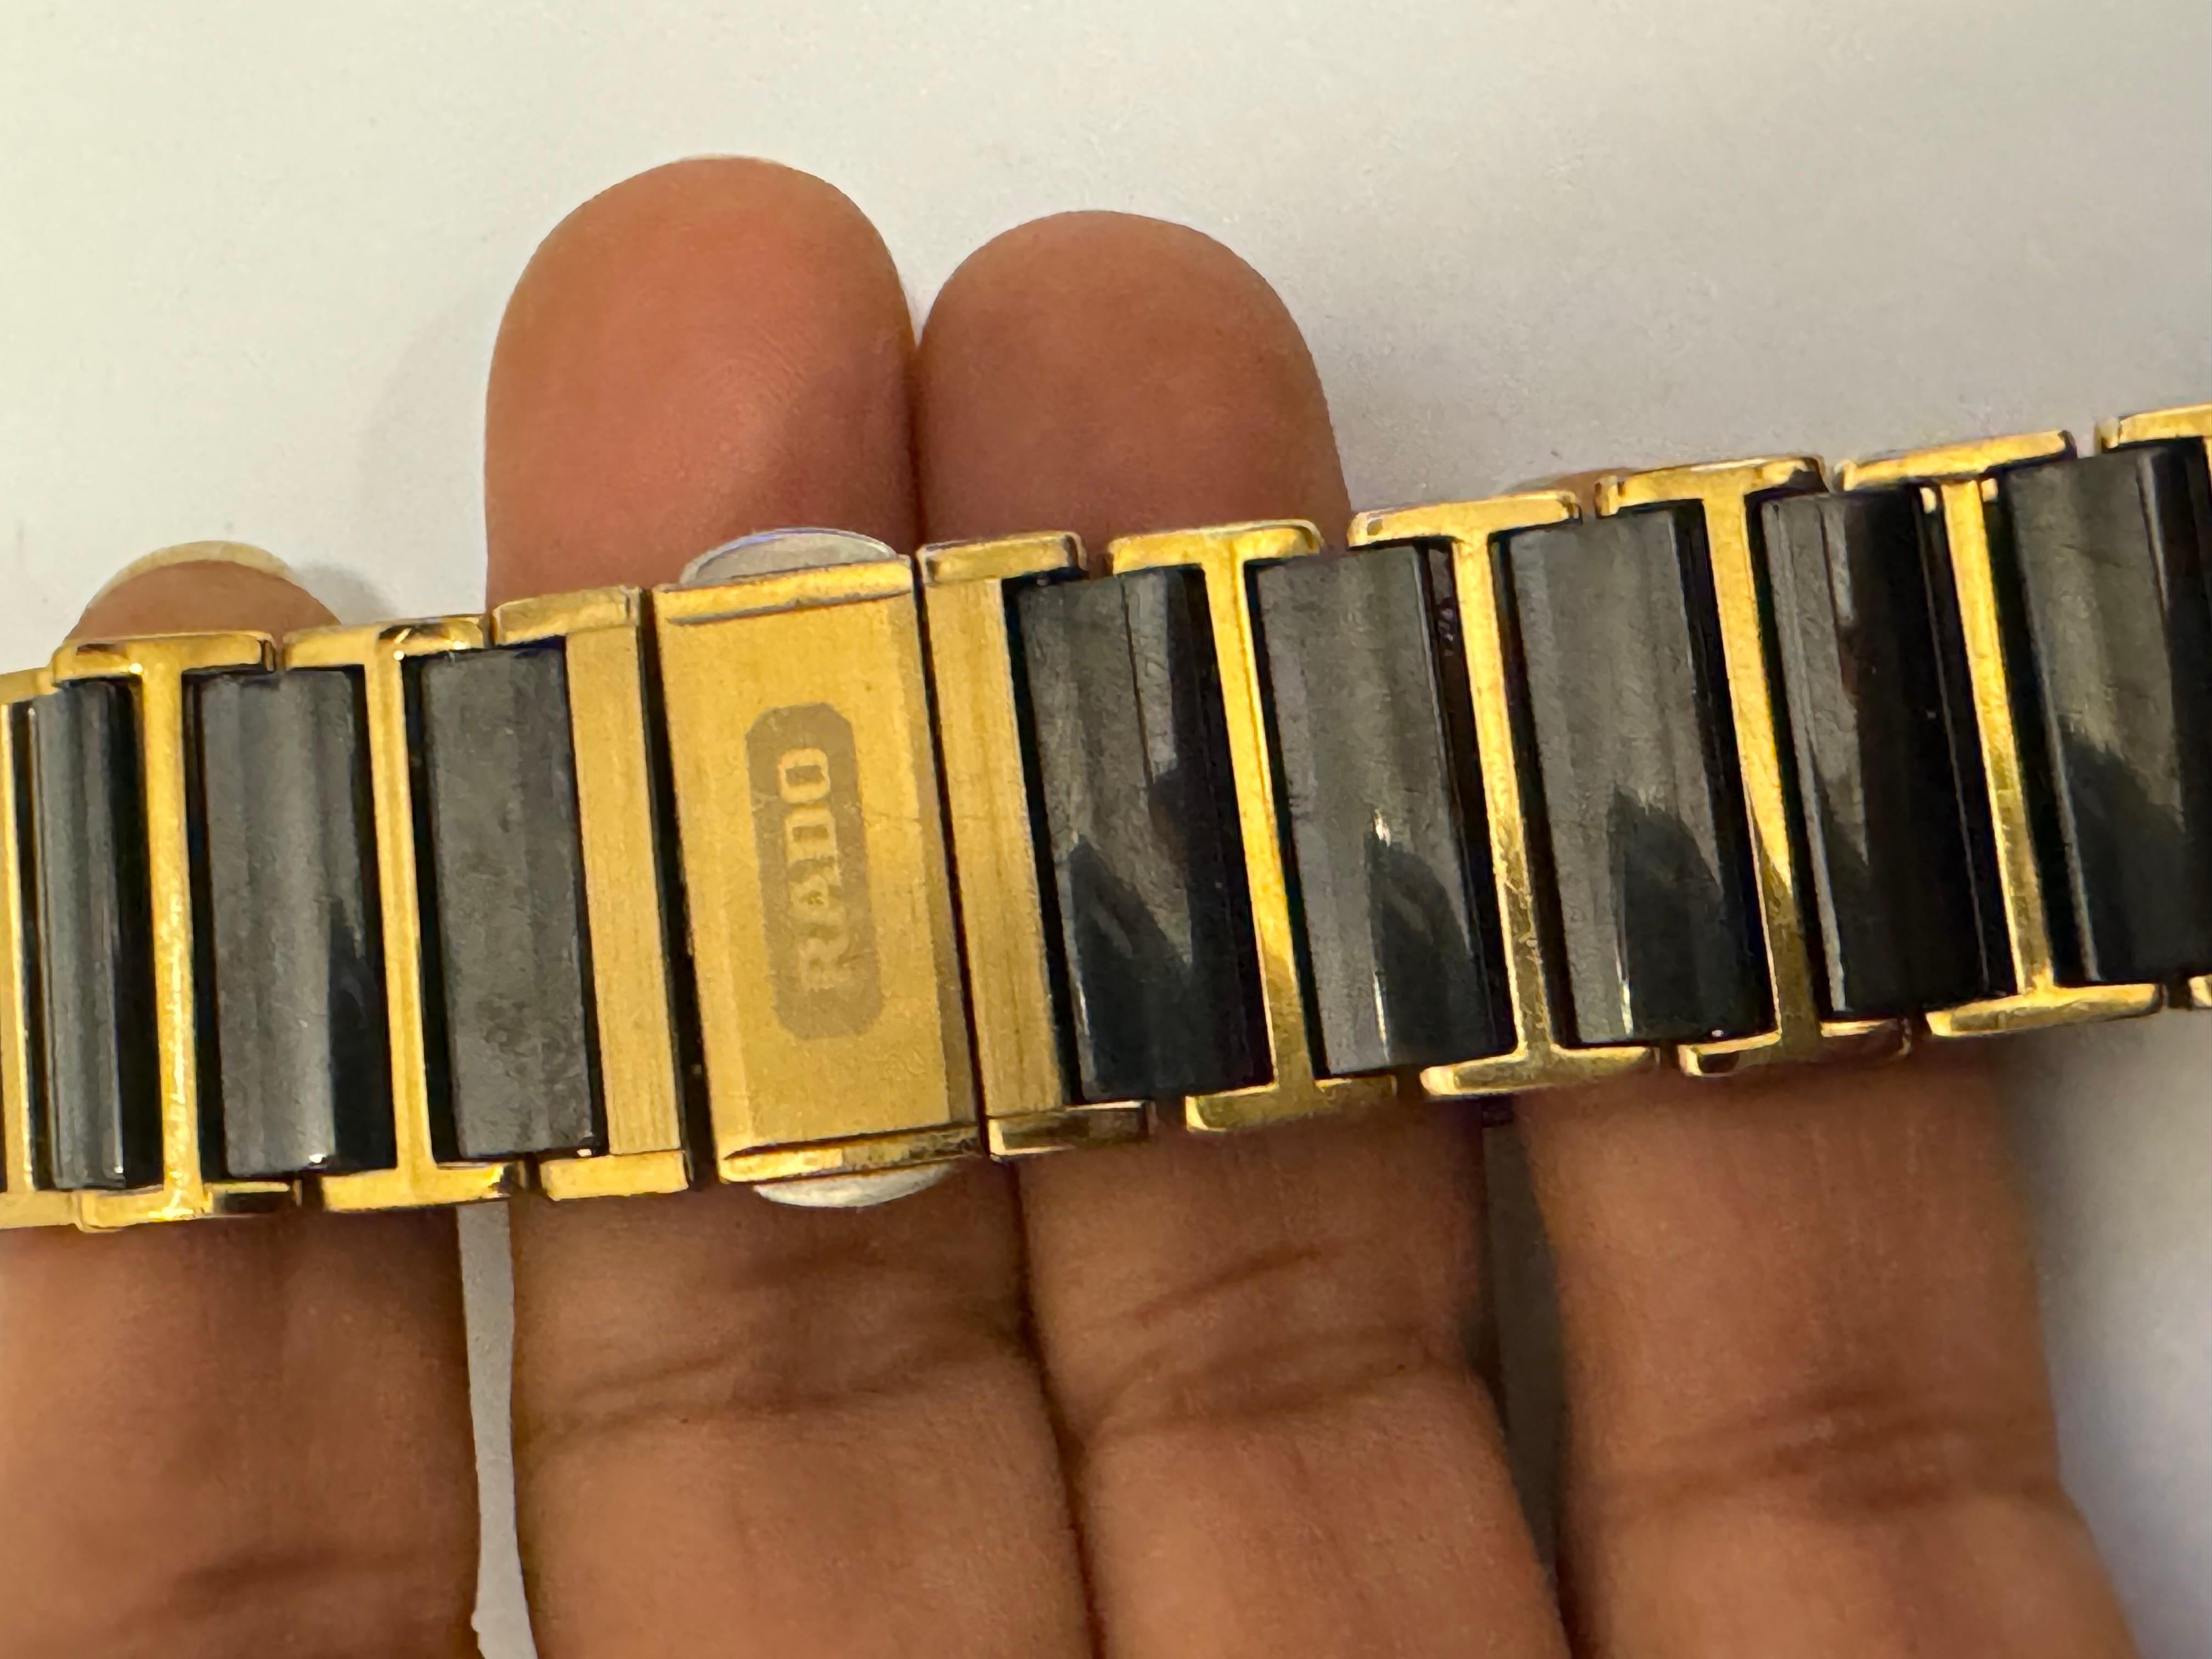 Rado DIRSTAR S bracelet watch - scratch proof, water sealed, high tech ceramics. For Sale 7